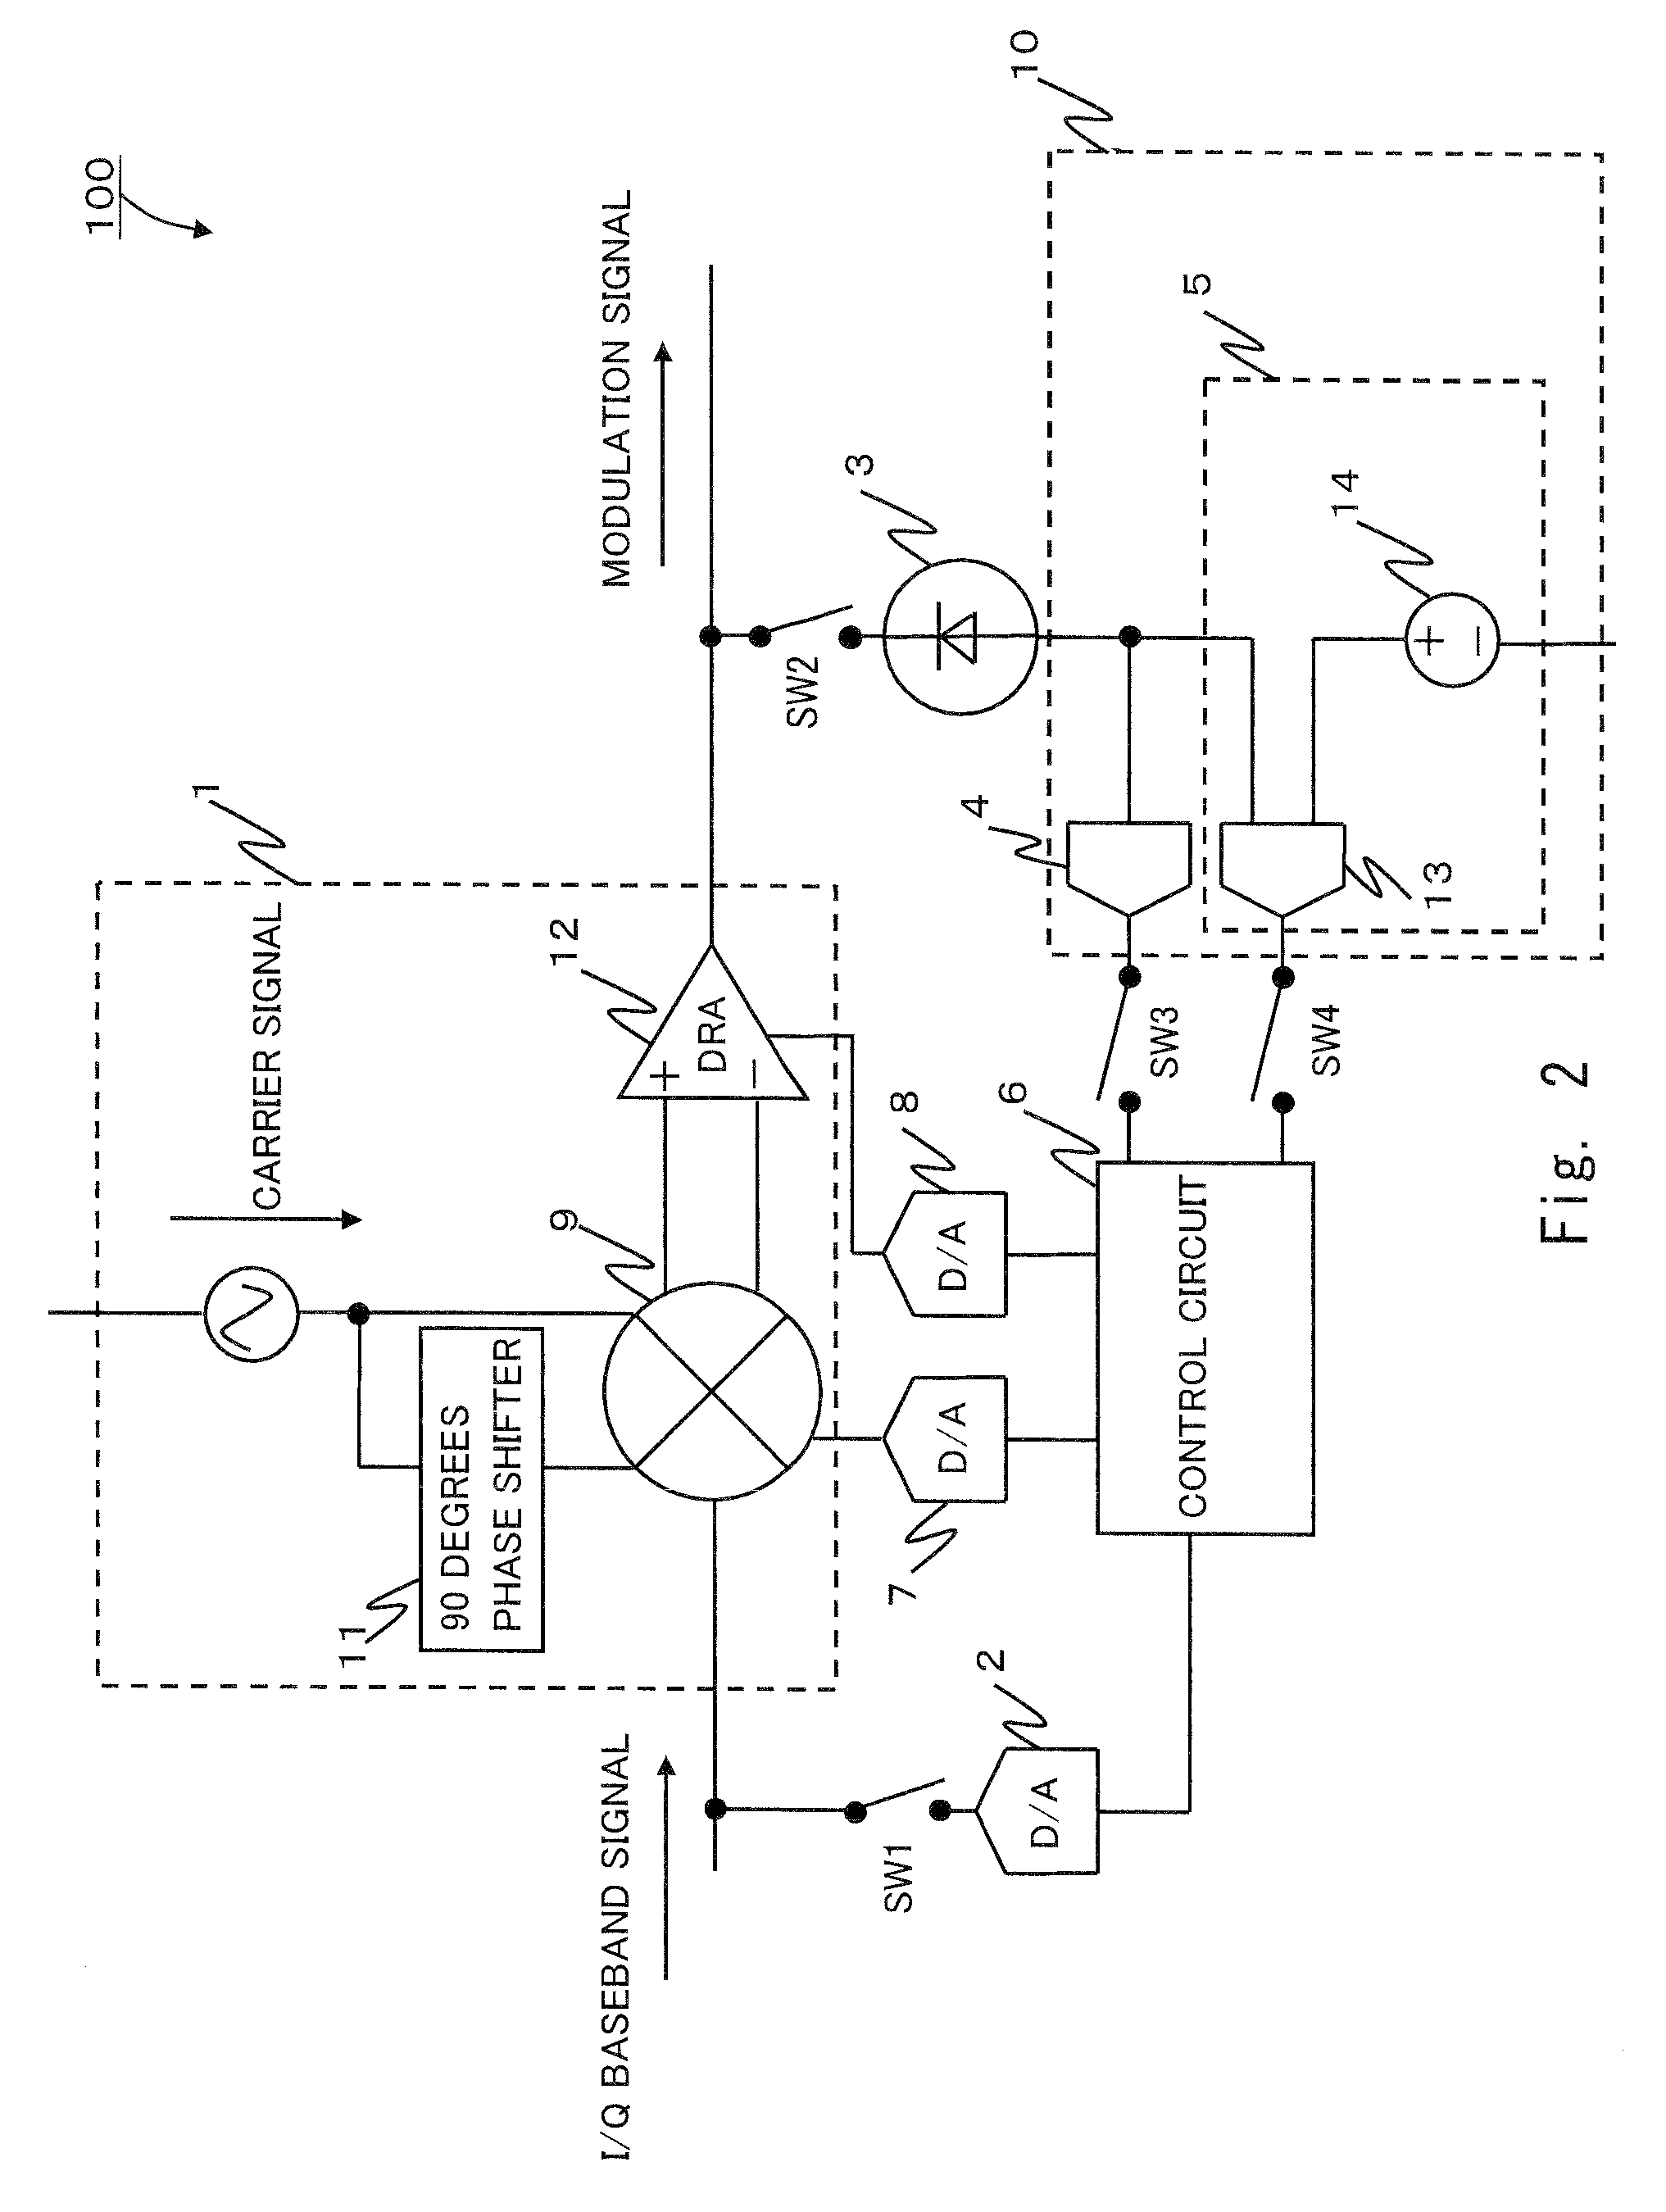 Modulation circuit having DC offset level control circuit